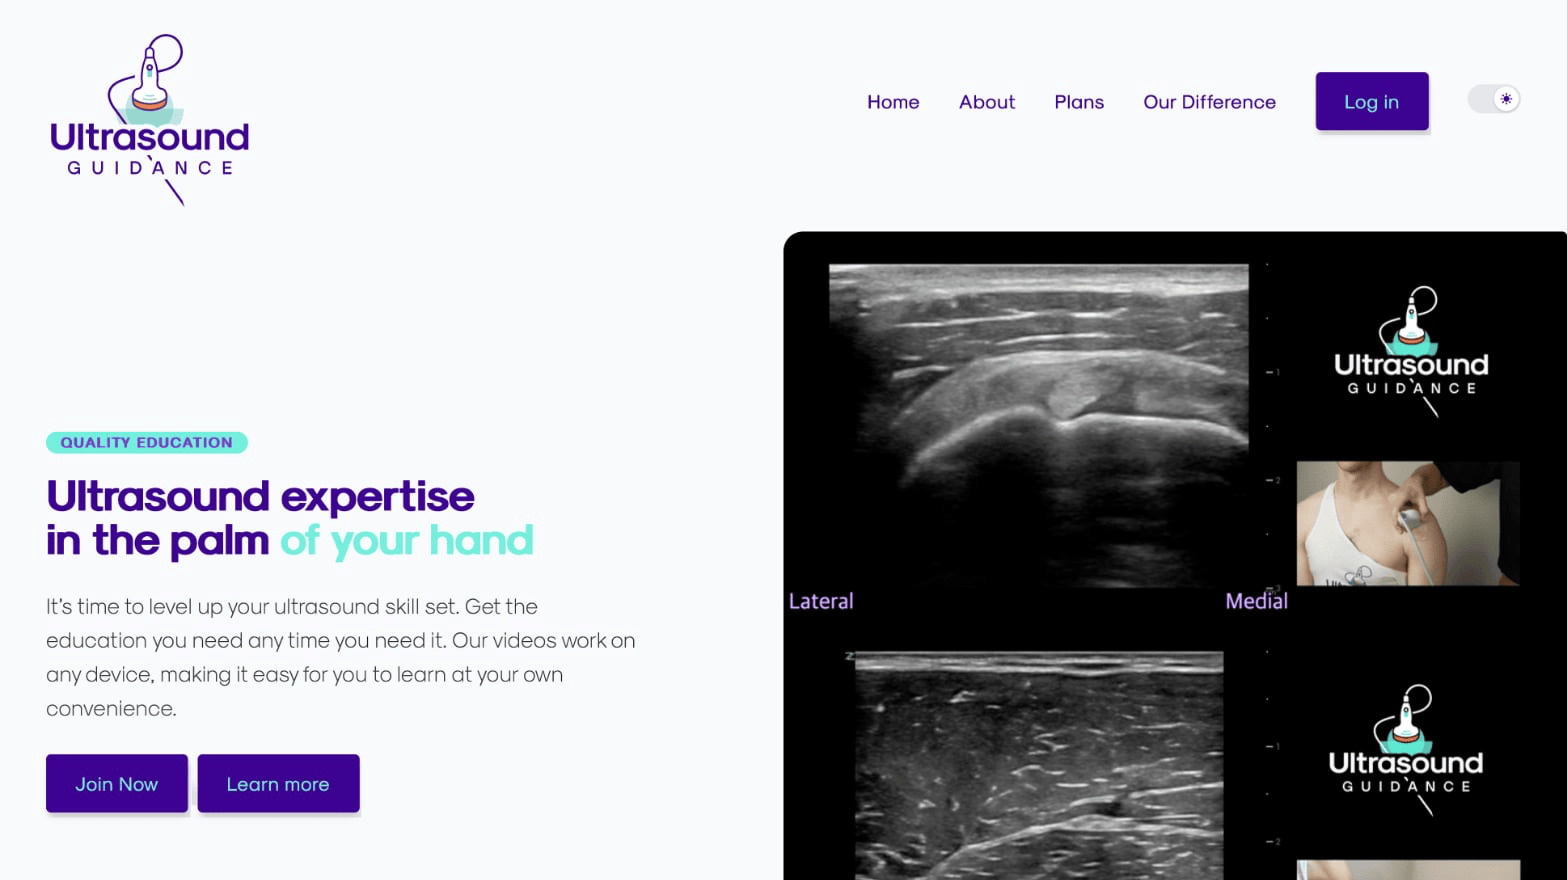 Screenshot of Ultrasound Guidance website, showing navigation, logo, hero image, and description